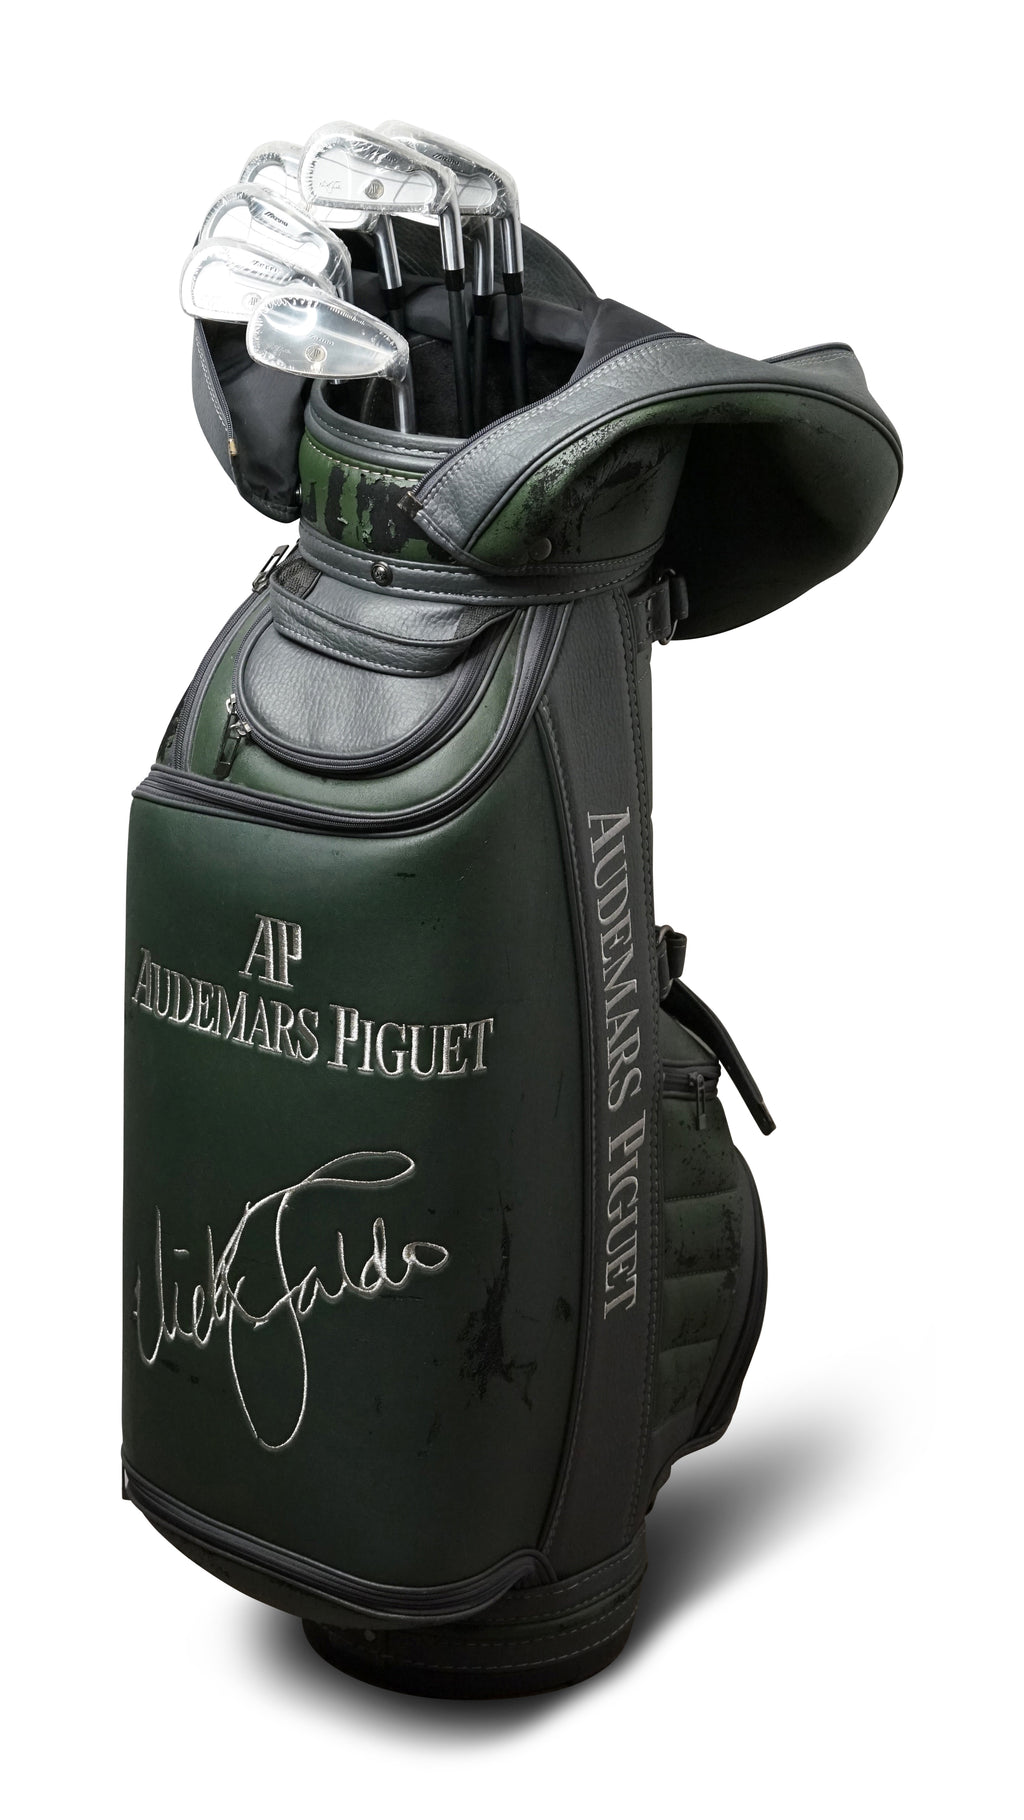 Official Nick Faldo and Audemars Piguet Golf Club Set by Mizuno Signature Series Nick Faldo Autographed Bag PGA Champion